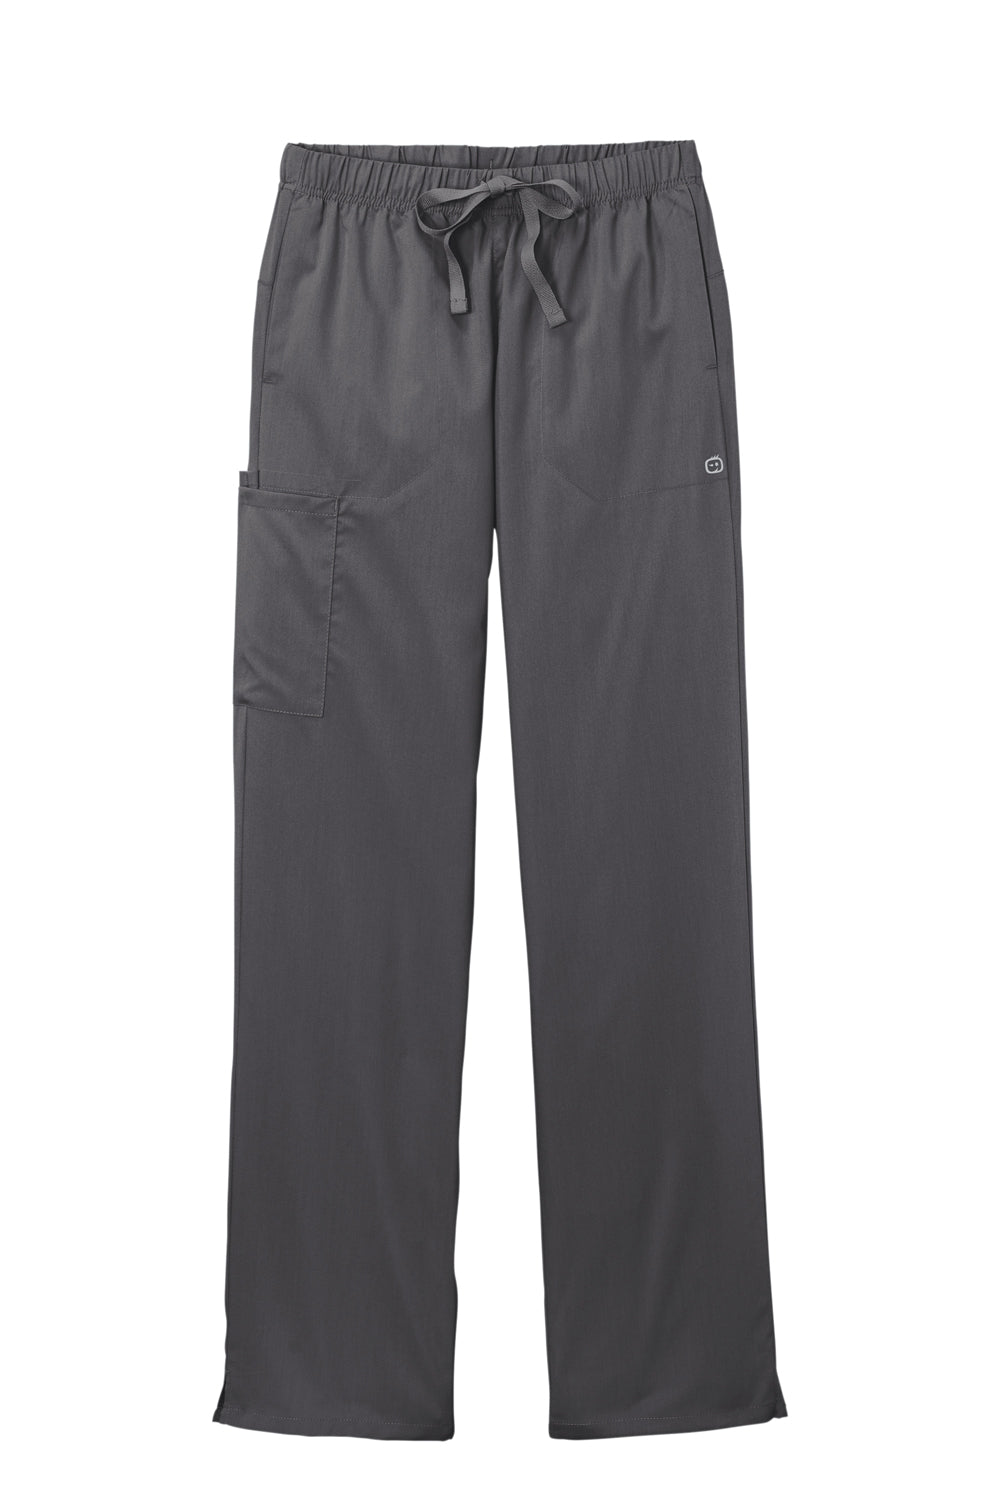 Wonderwink WW4158 Premiere Flex Cargo Pants w/ Pockets Pewter Grey Flat Front